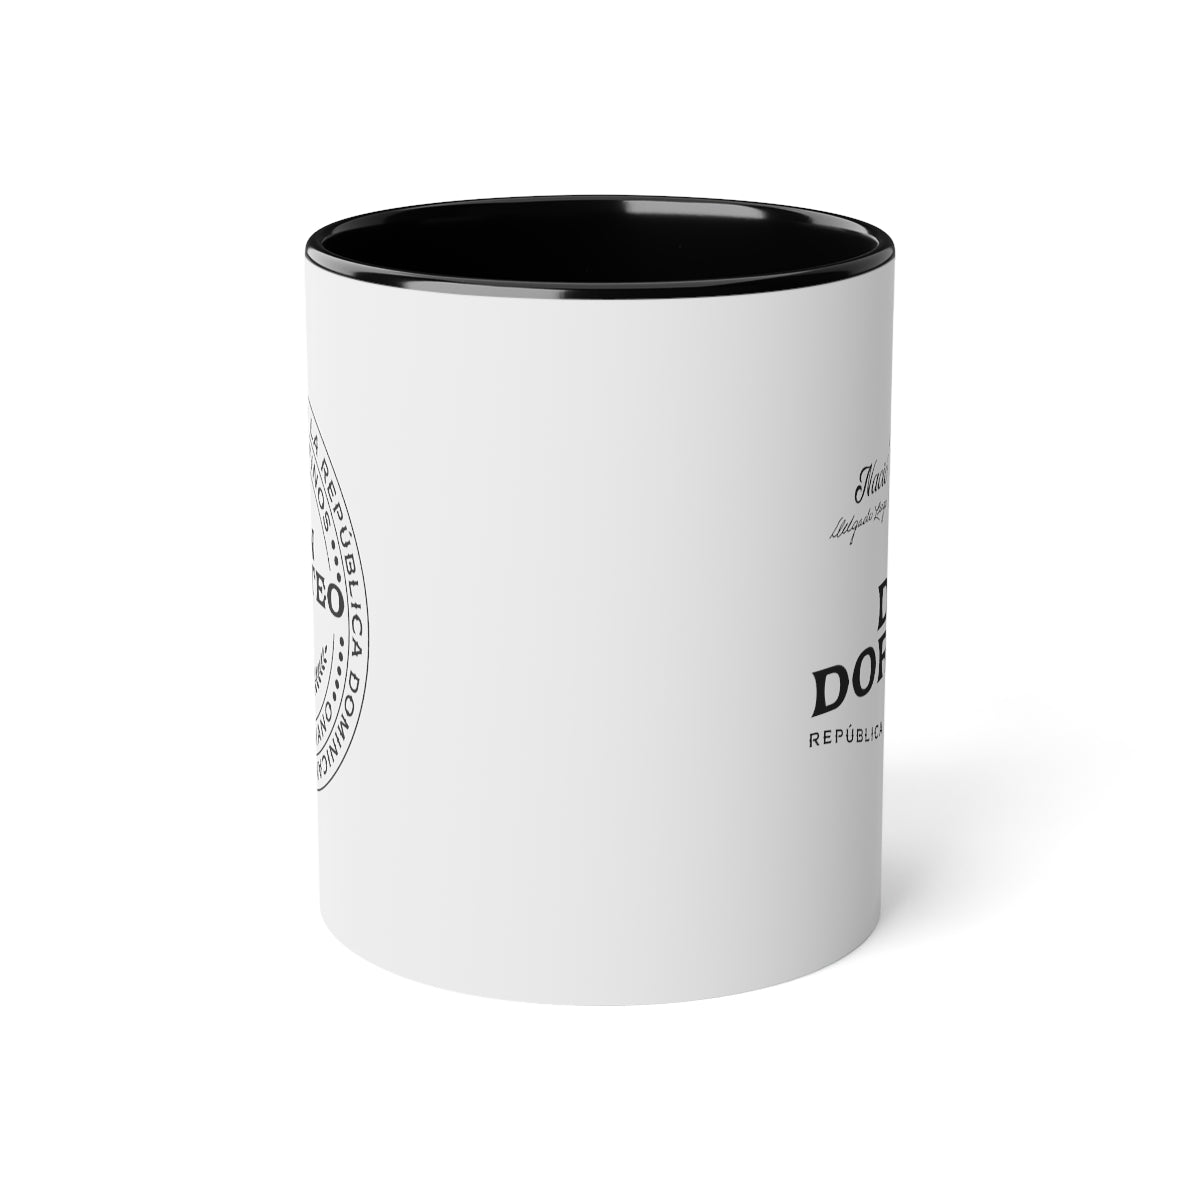 Don Doroteo Logo/Seal White Accent Mug, 11oz